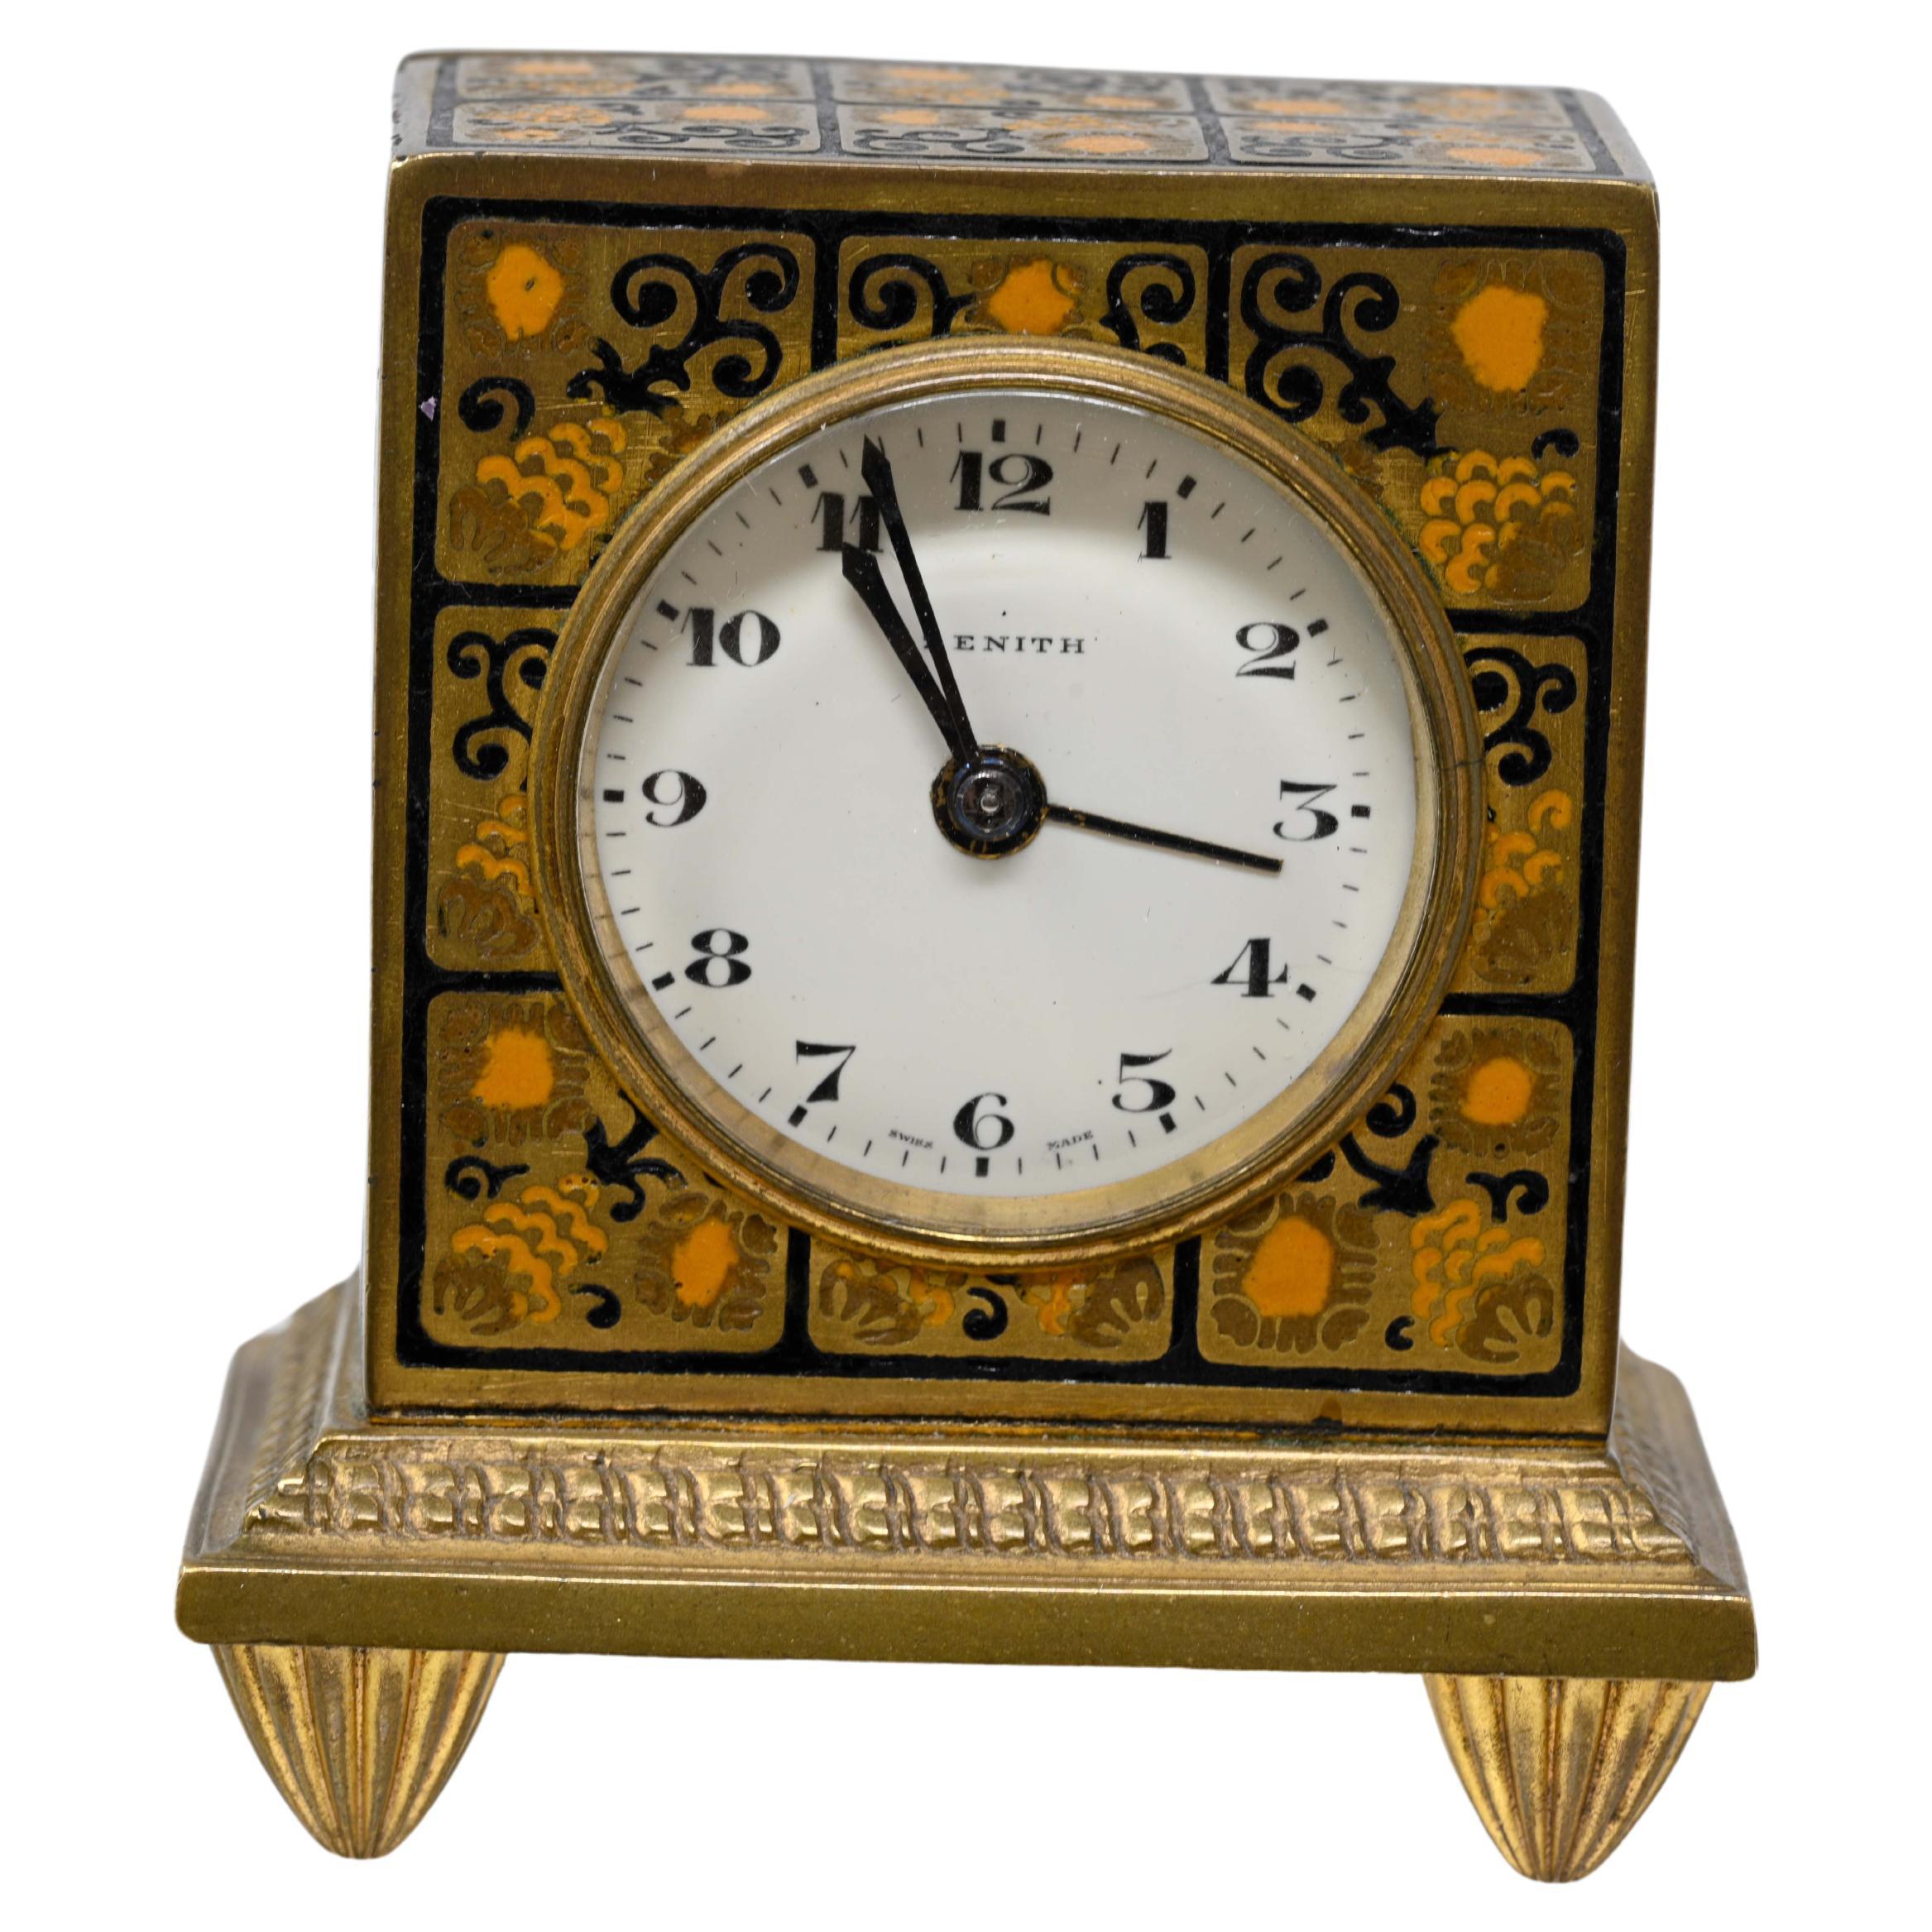 Zenith Alarm, horloge de voyage dorée émaillée en bronze